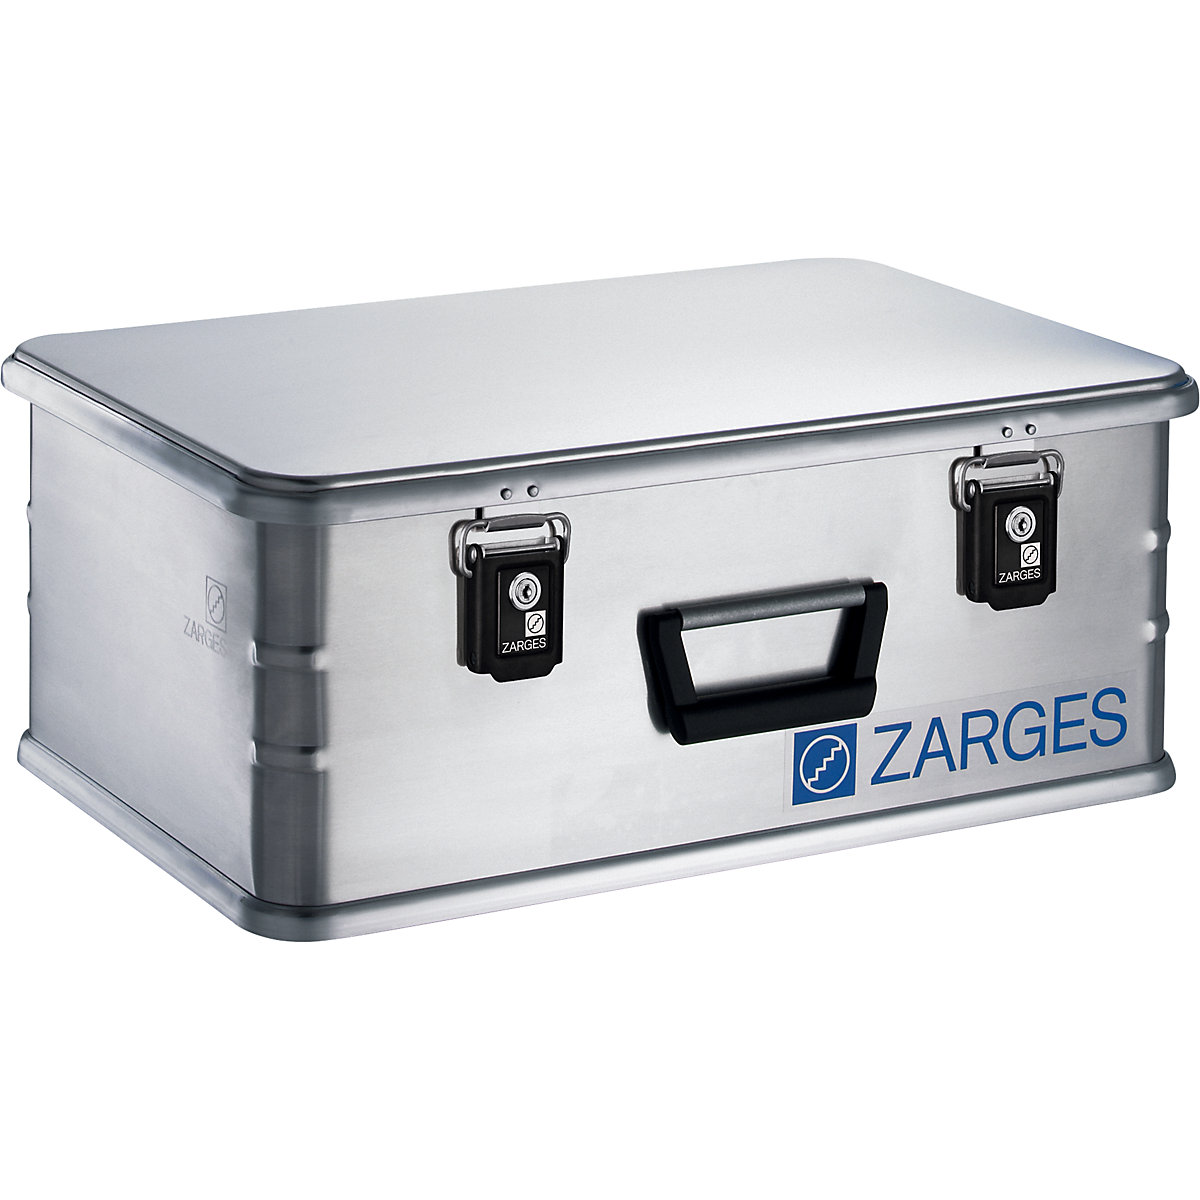 Caja combinada de aluminio – ZARGES